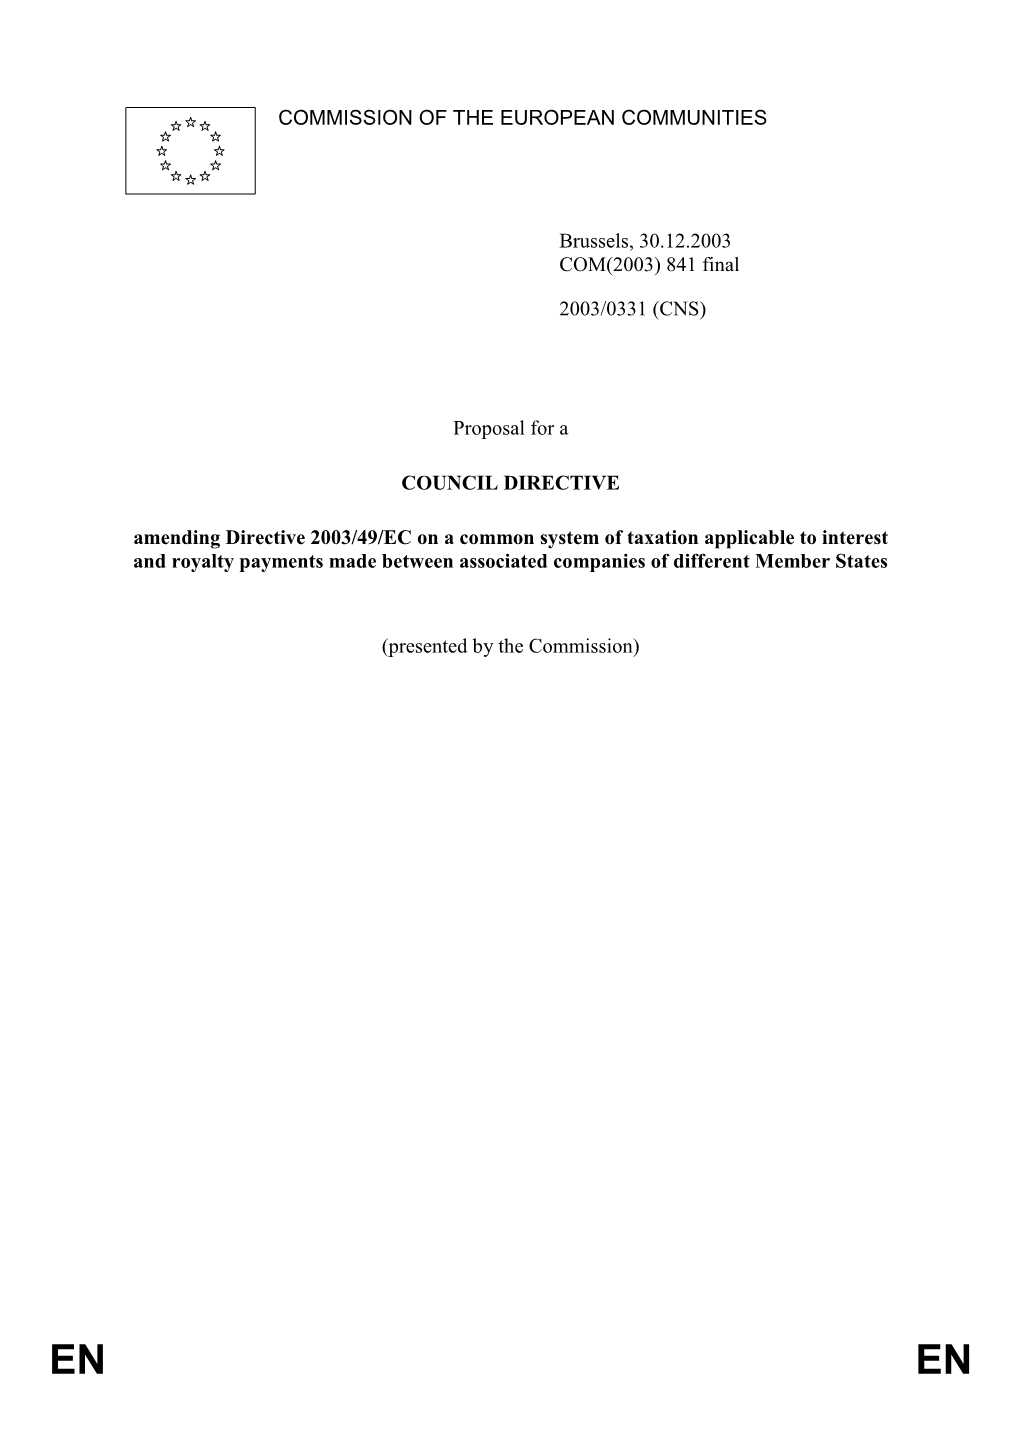 841 Final 2003/0331 (CNS) Proposal for a COUNCIL DIRECTIVE